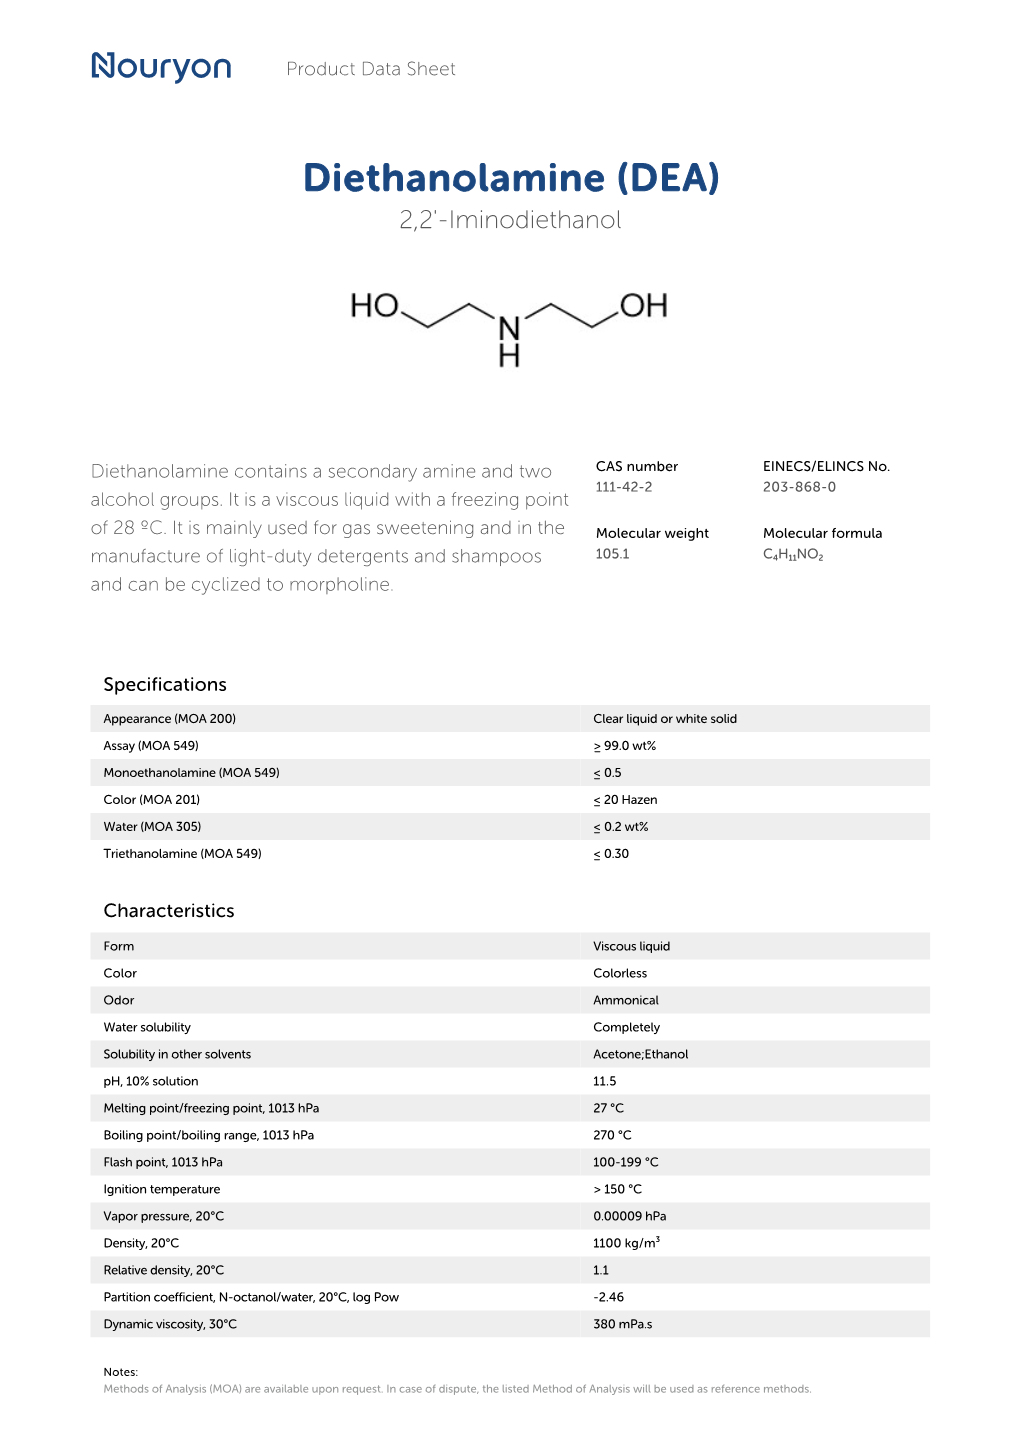 Diethanolamine (DEA) 2,2'-Iminodiethanol